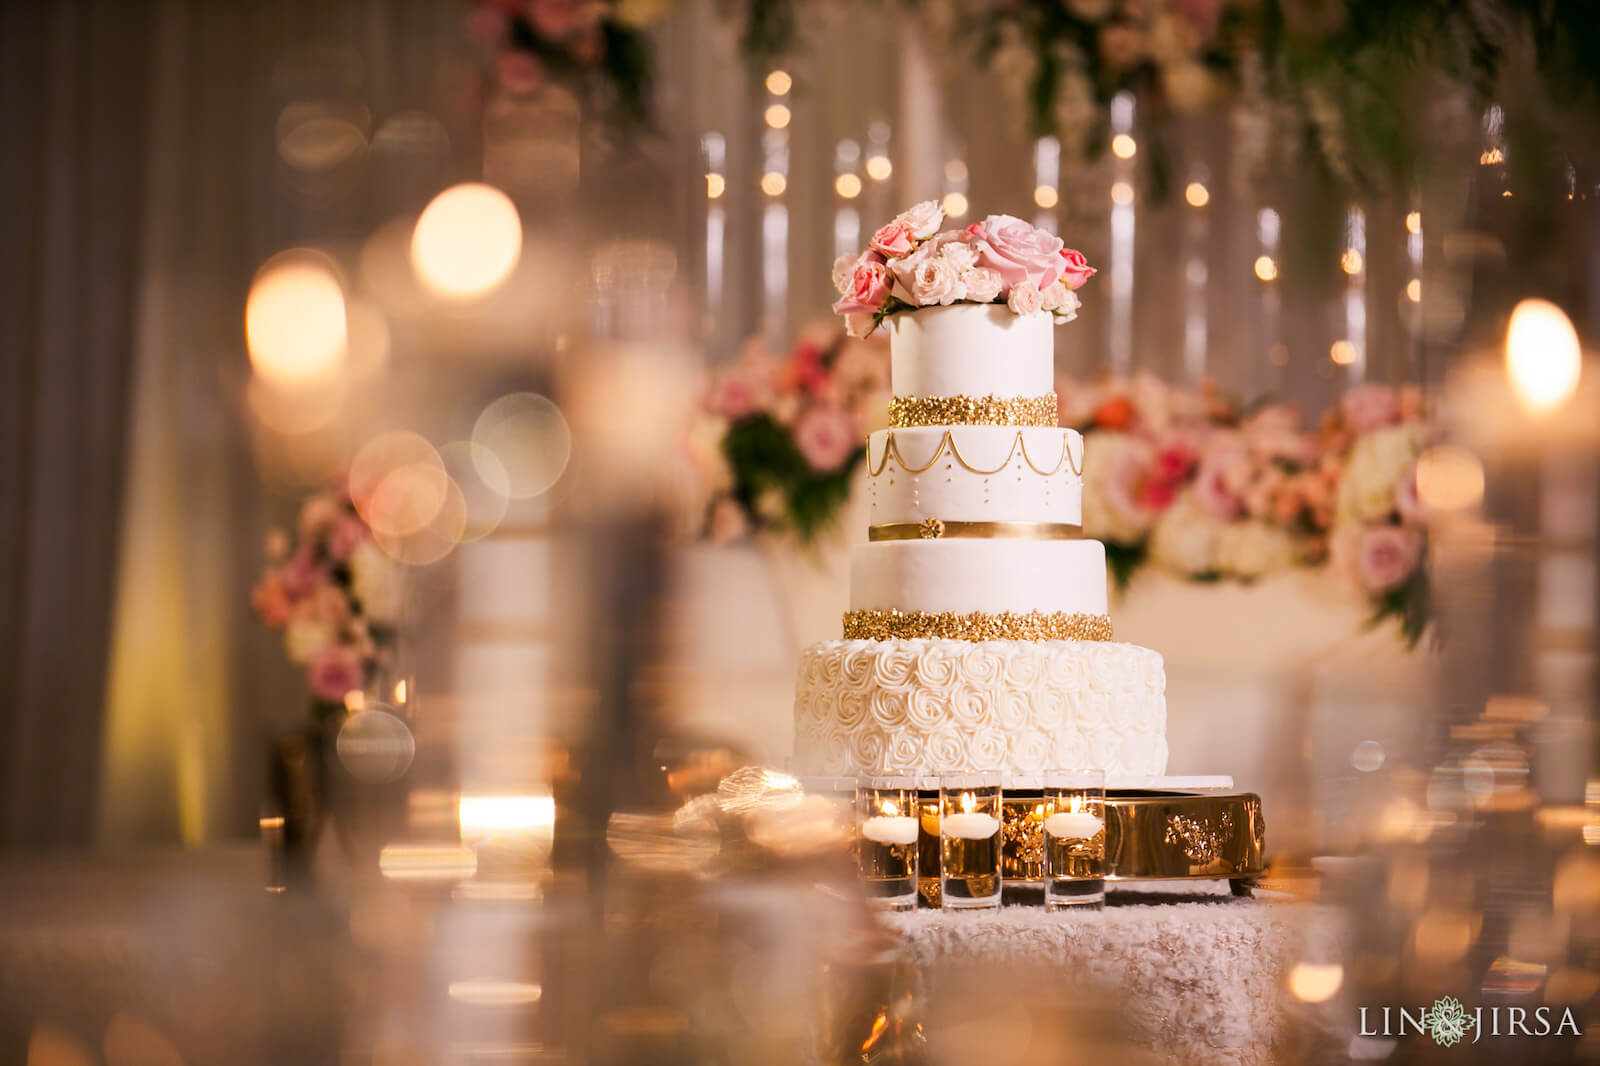 Wedding Cakes – The Shelbourne Bakery & Restaurant | Family Bakery in Newry  | Cafe & Restaurant in Newry | Order Cakes Online, Ireland